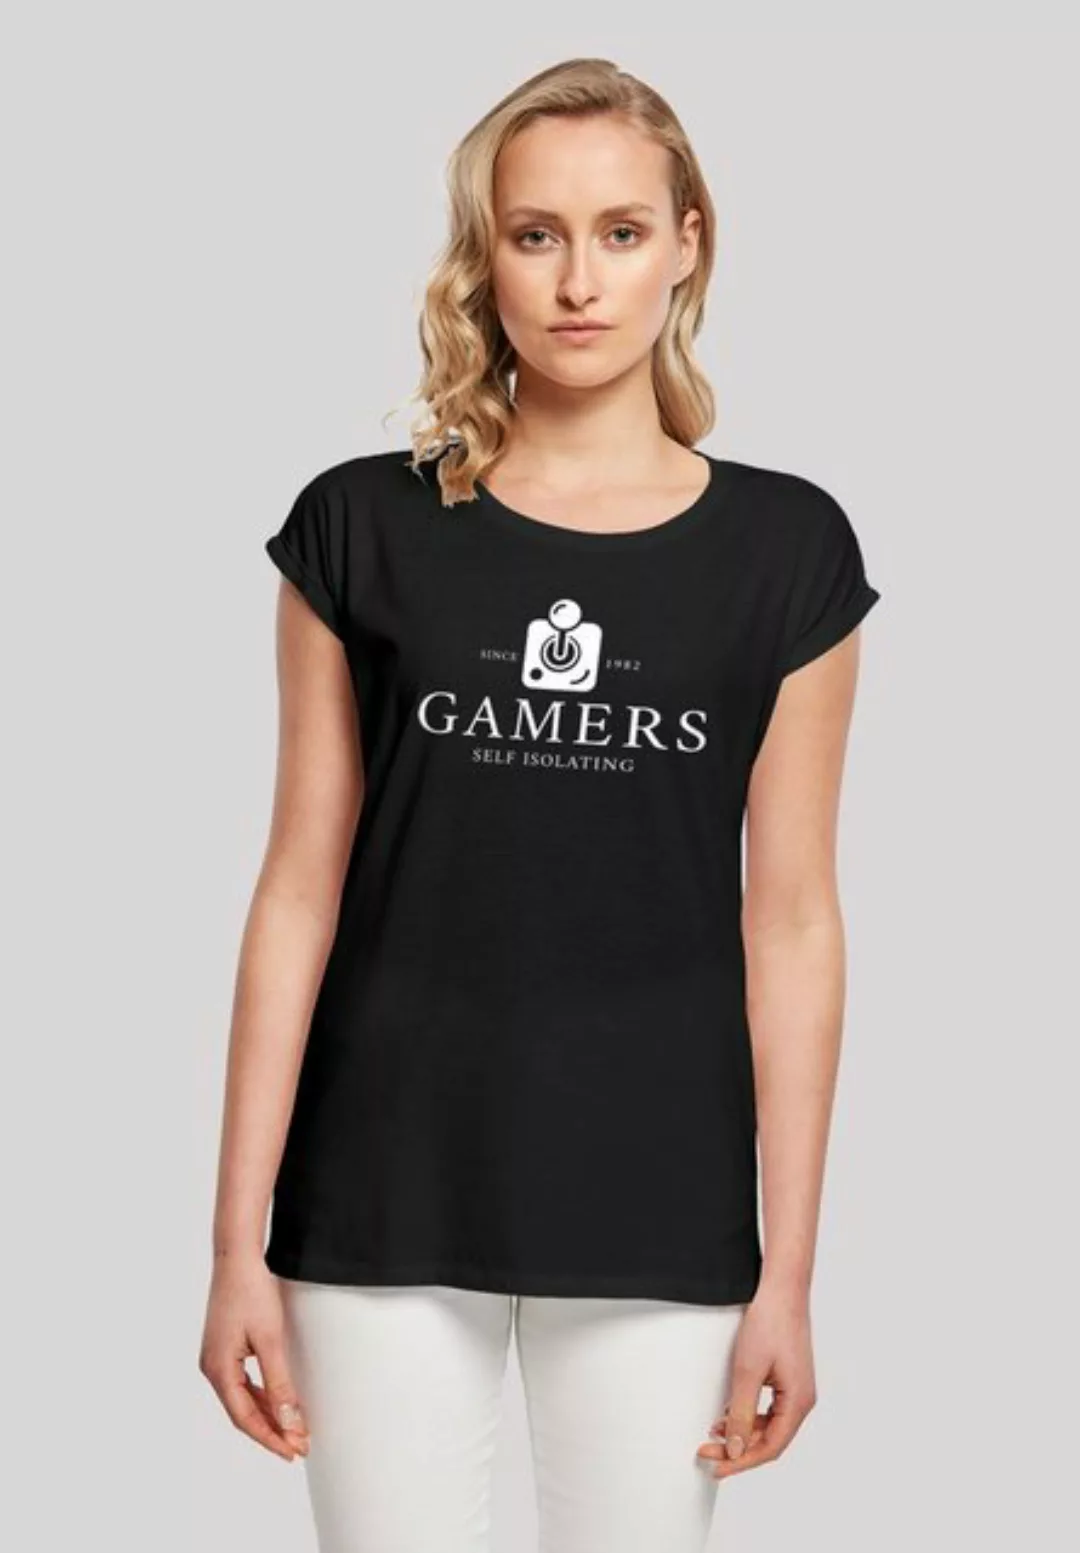 F4NT4STIC T-Shirt "Retro Gaming Gamers Self Isolating", Print günstig online kaufen